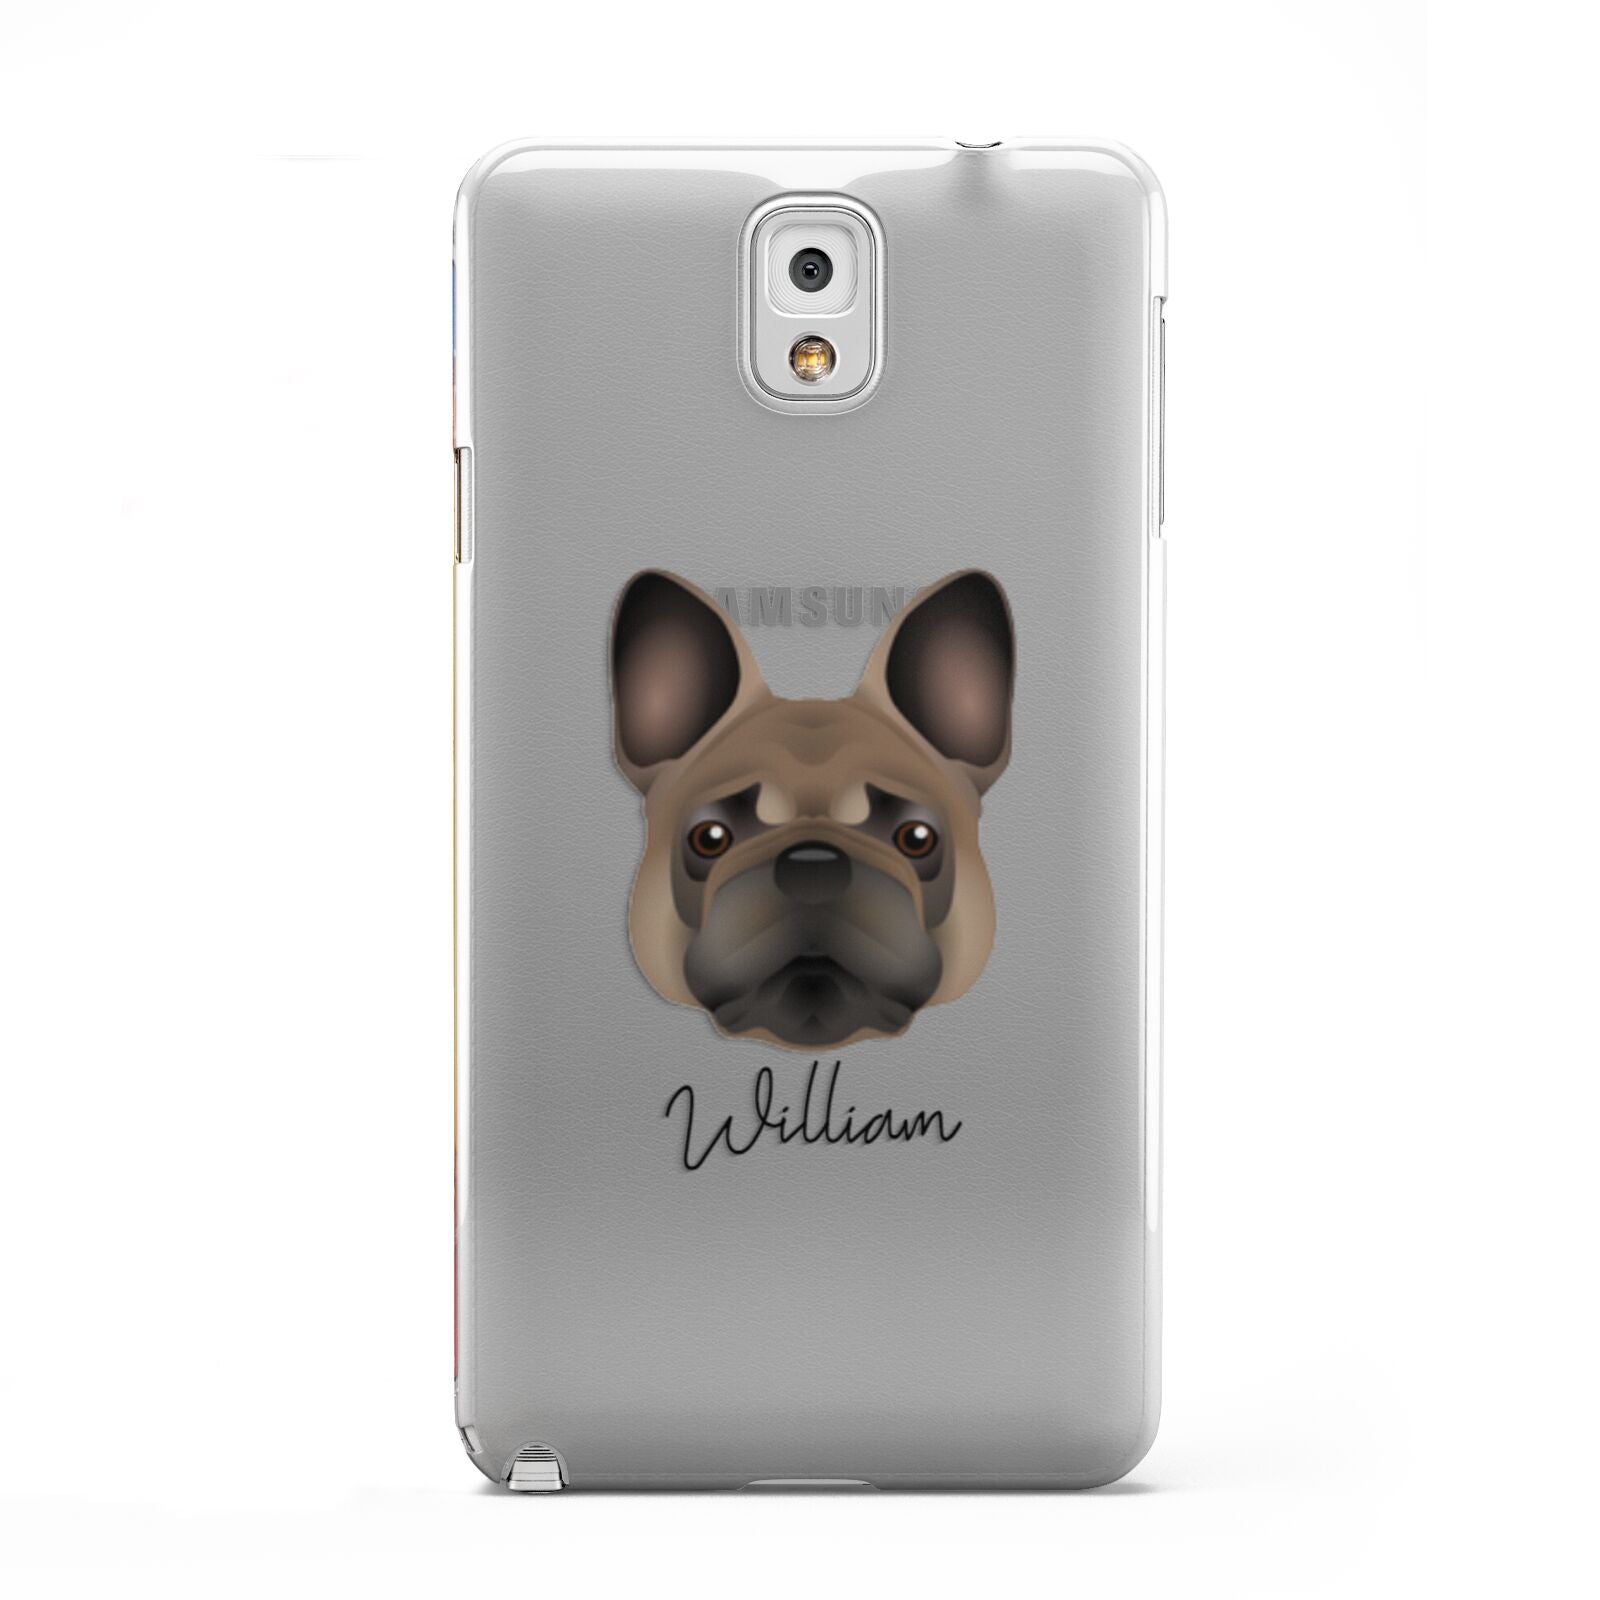 French Bulldog Personalised Samsung Galaxy Note 3 Case